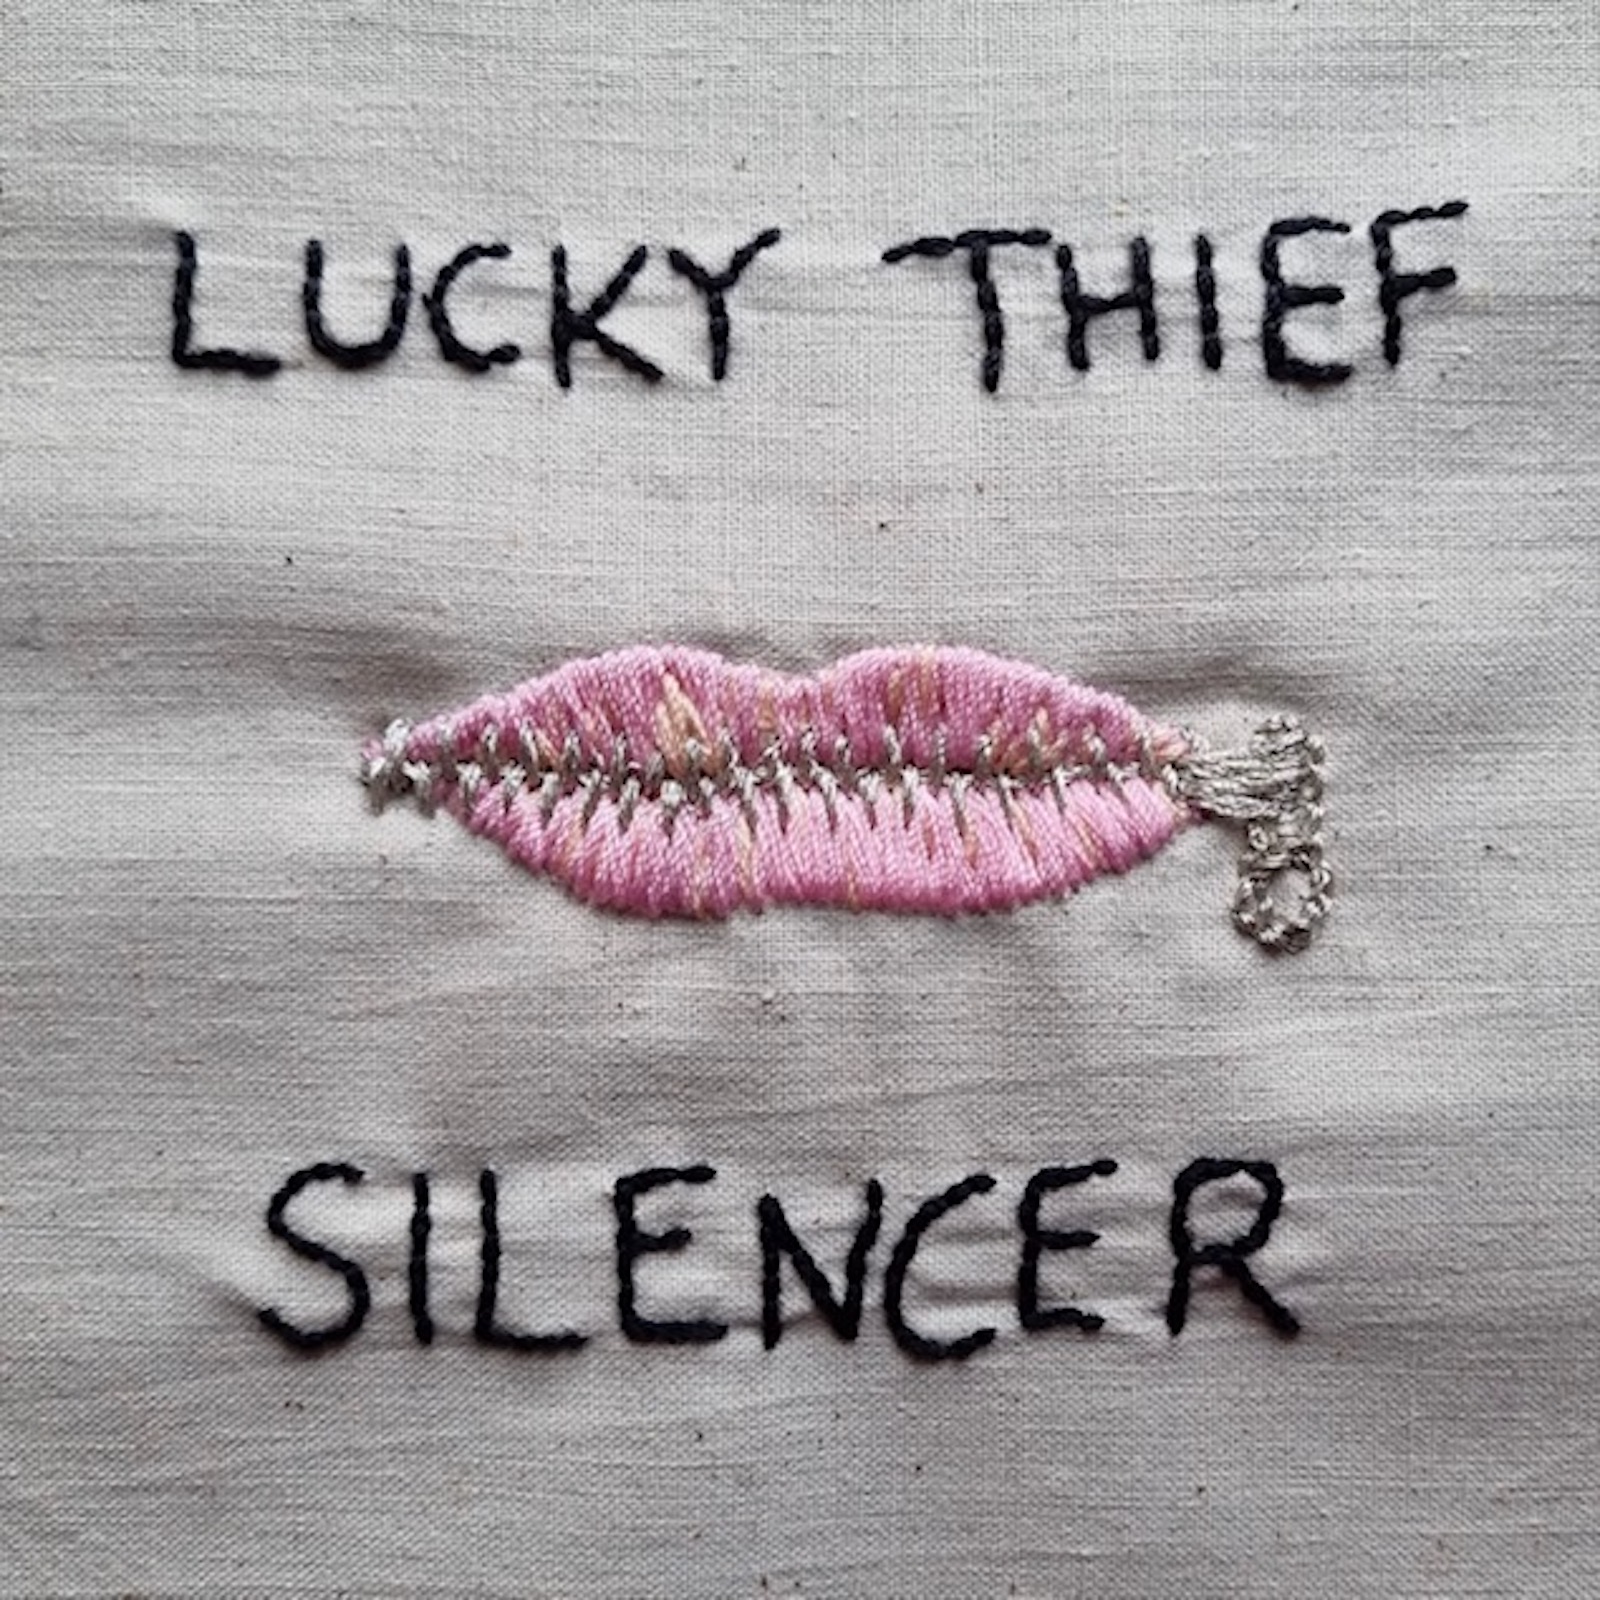 LISTEN: “Silencer” by Lucky Thief